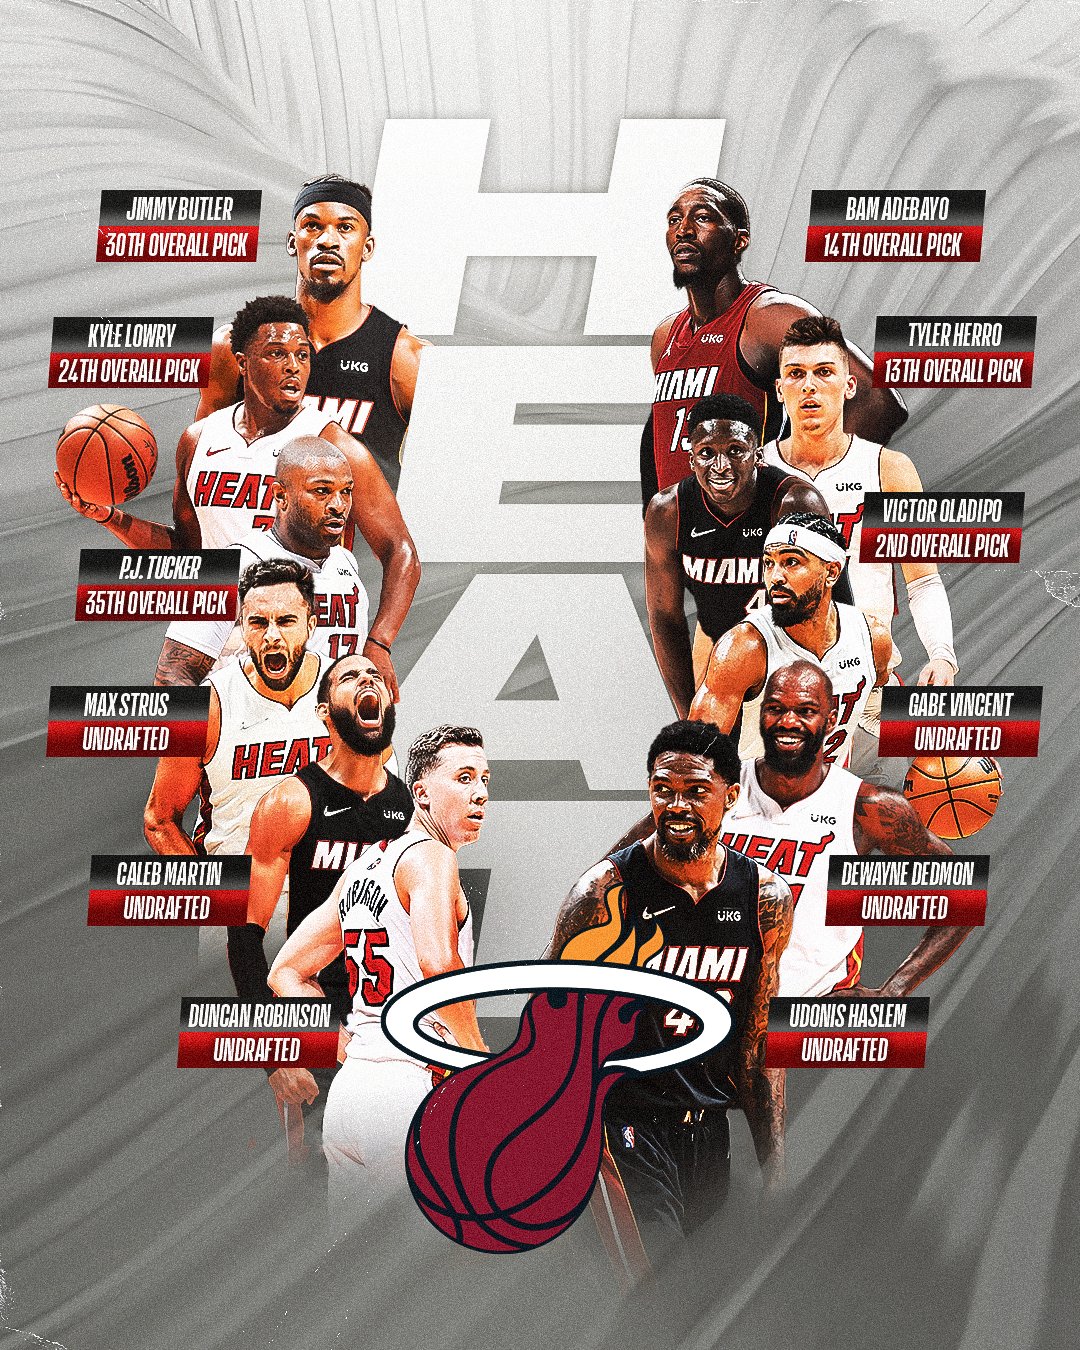 All-Time Miami Heat Team